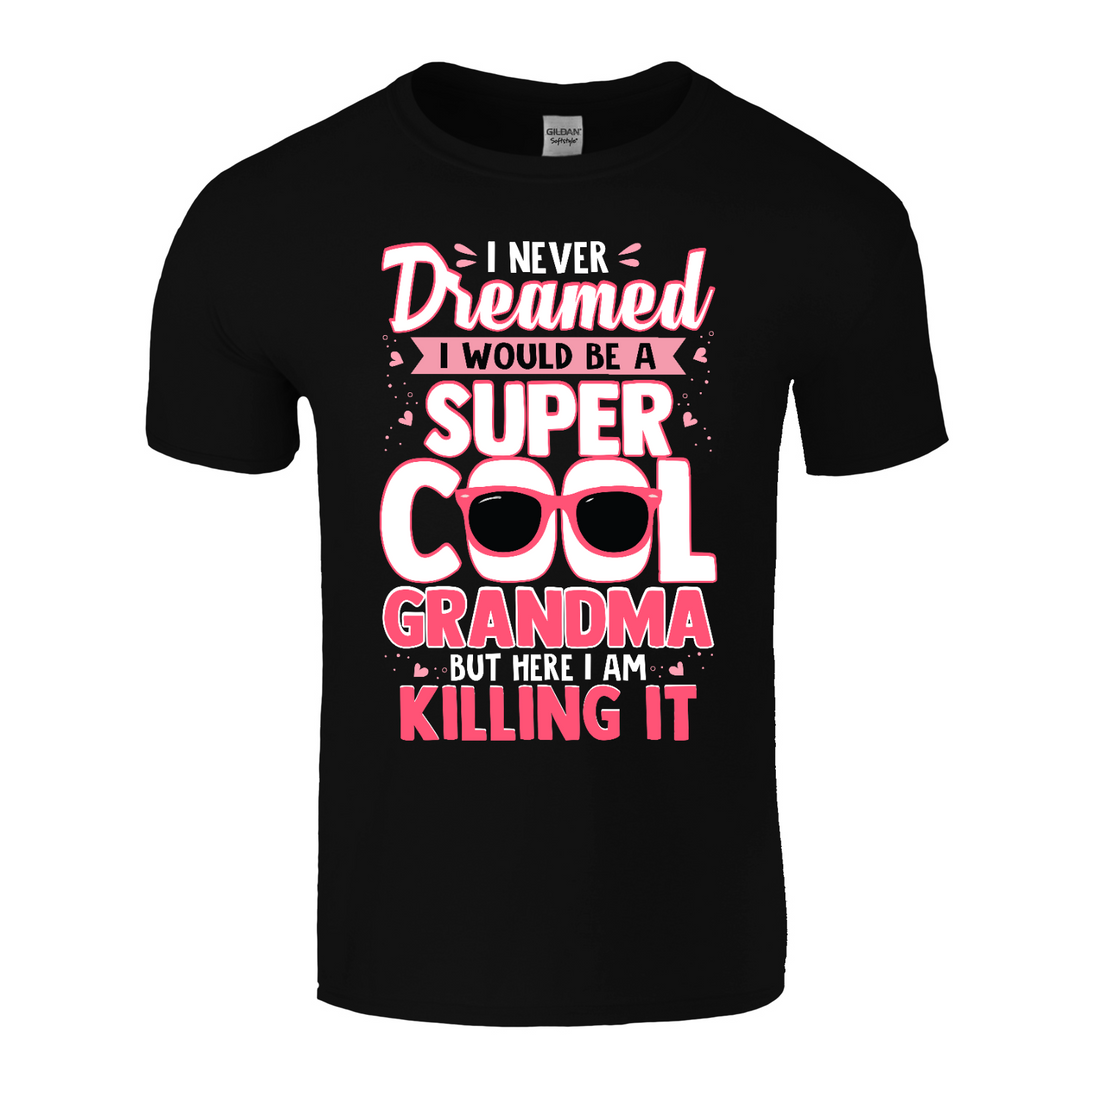 Super Cool Grandma | Black Tee Shirt